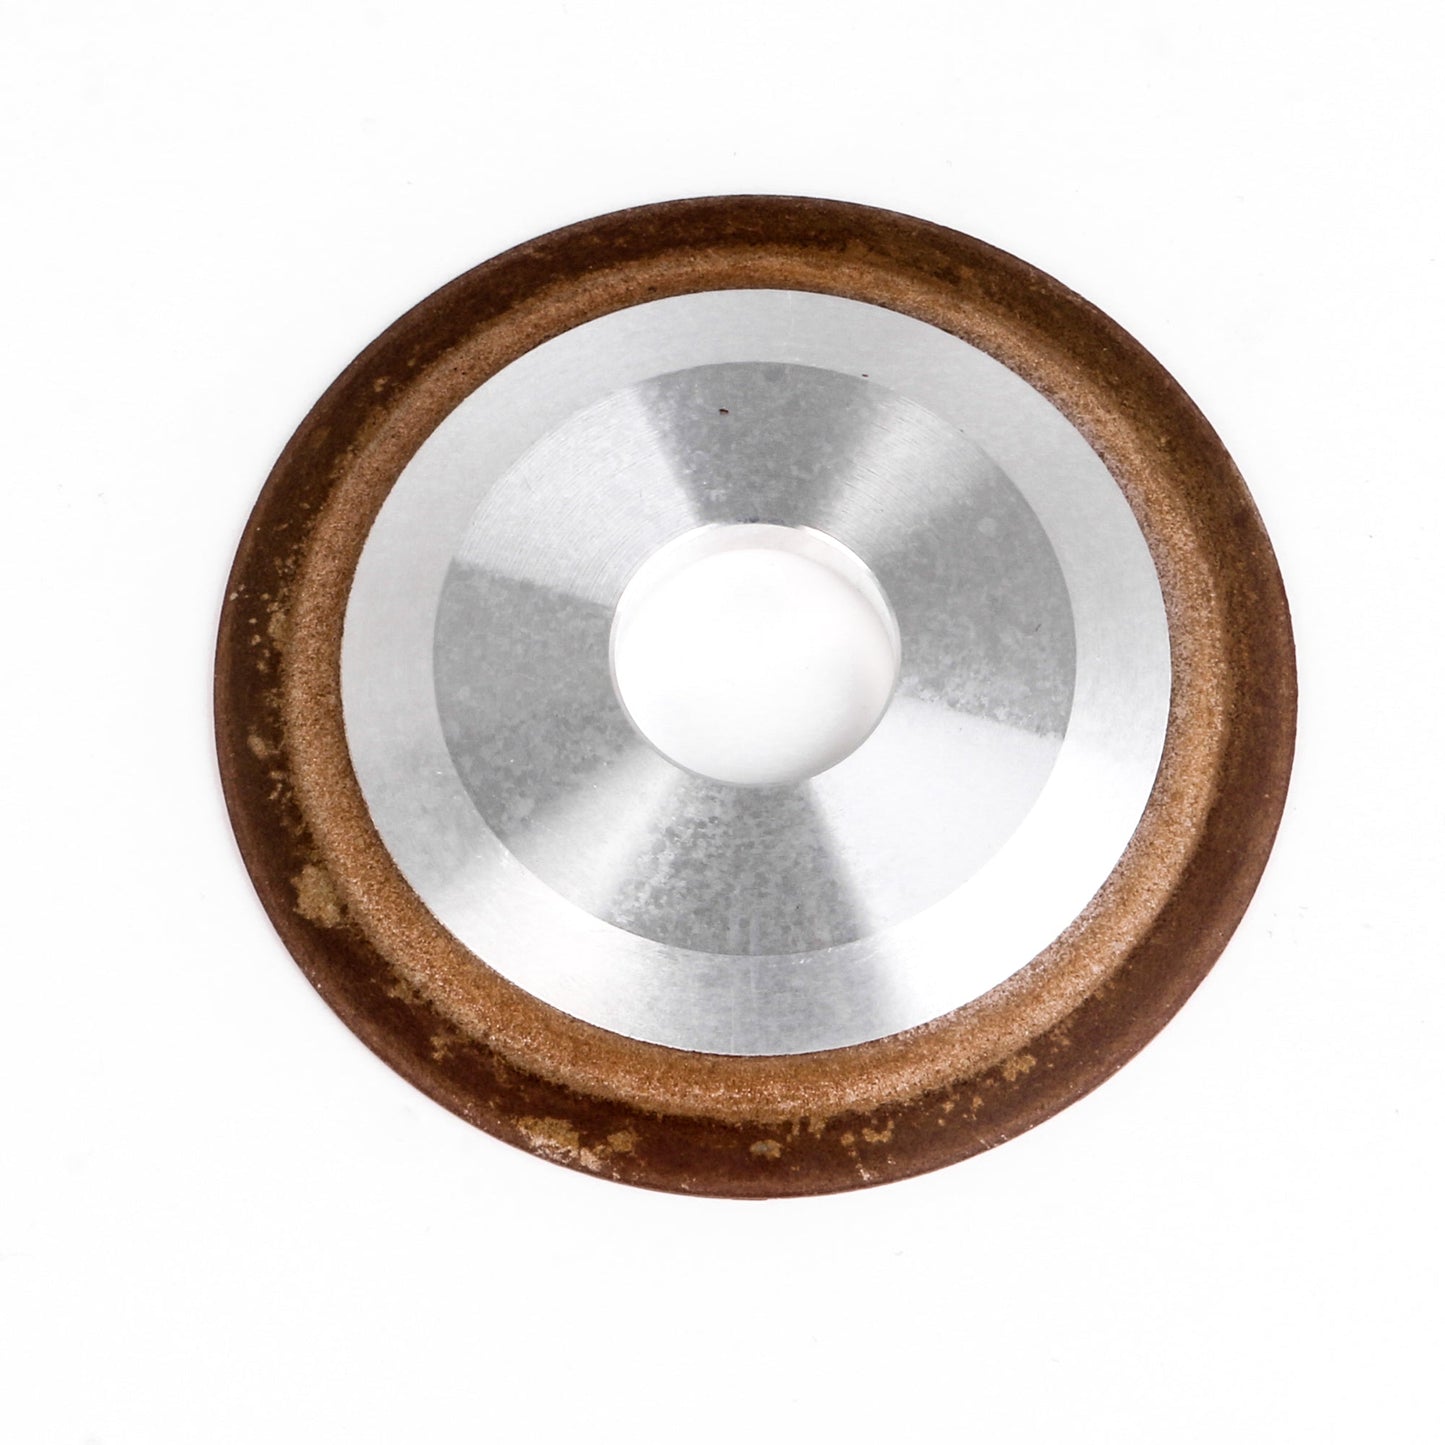 BQLZR Single Side #150 Grit Diamond Disc Grinding Wheel 4.92inch OD Power Tool Pack of 2